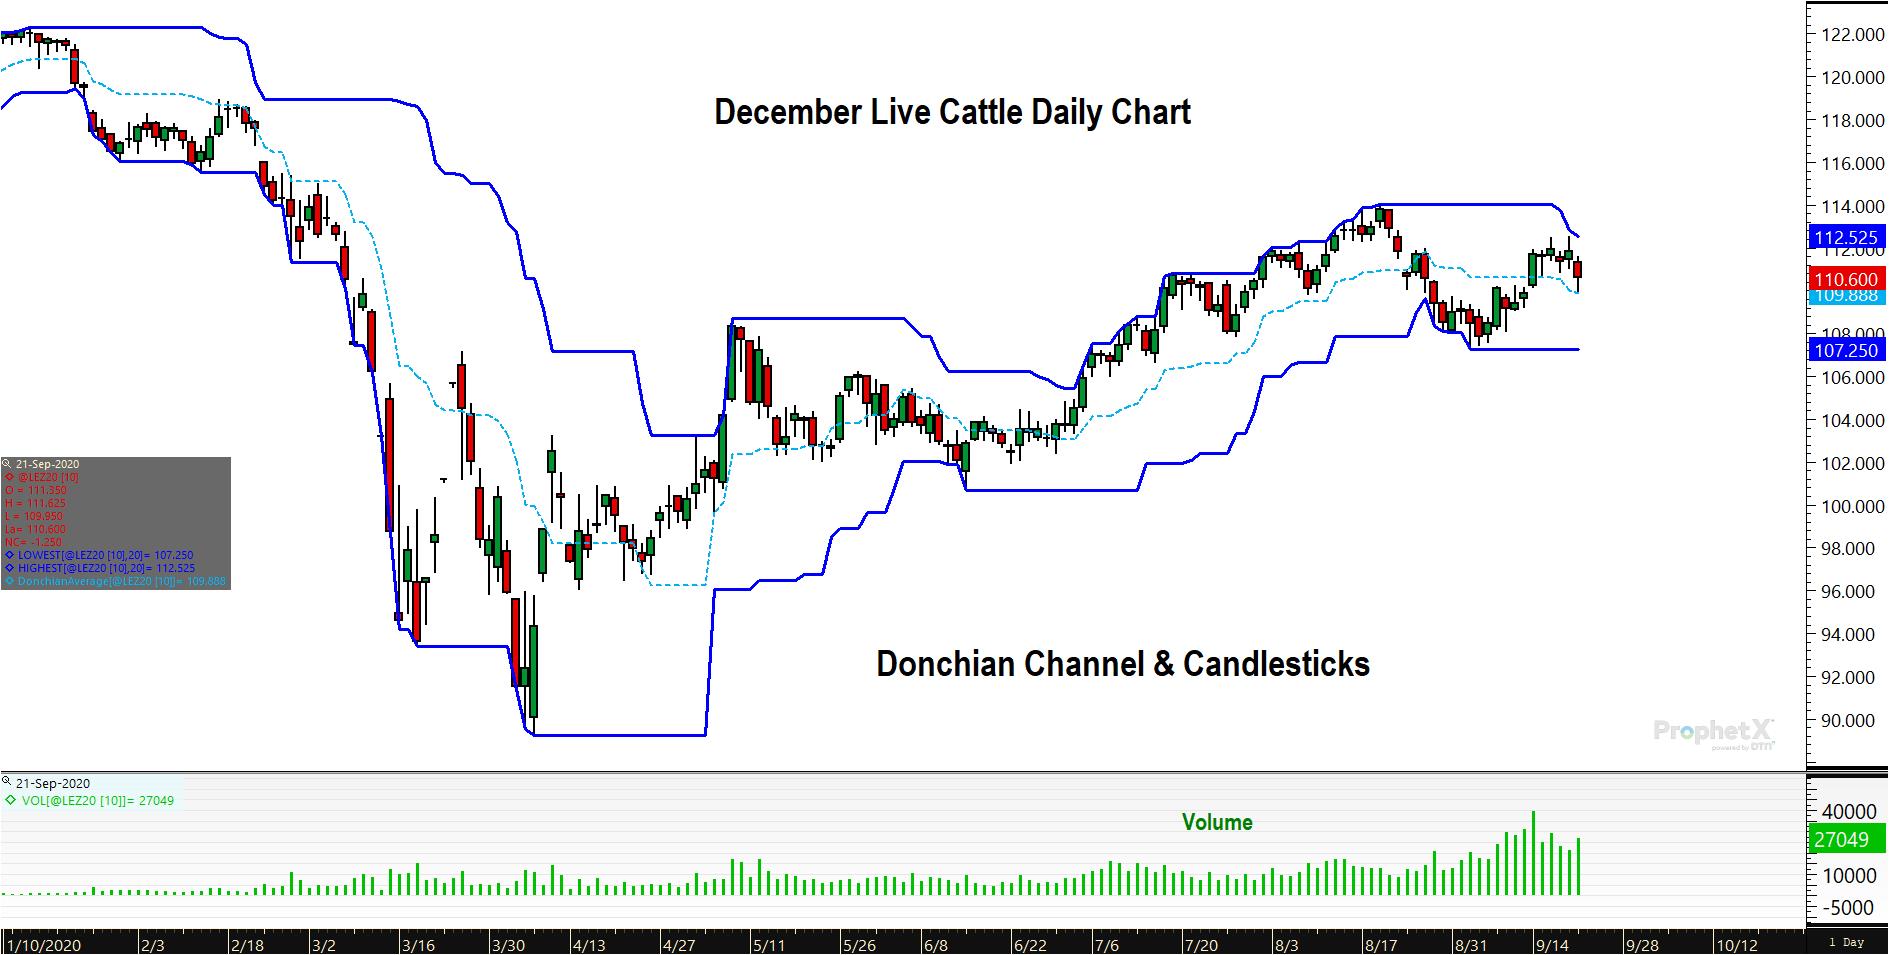 December Live Cattle Donchian Channel